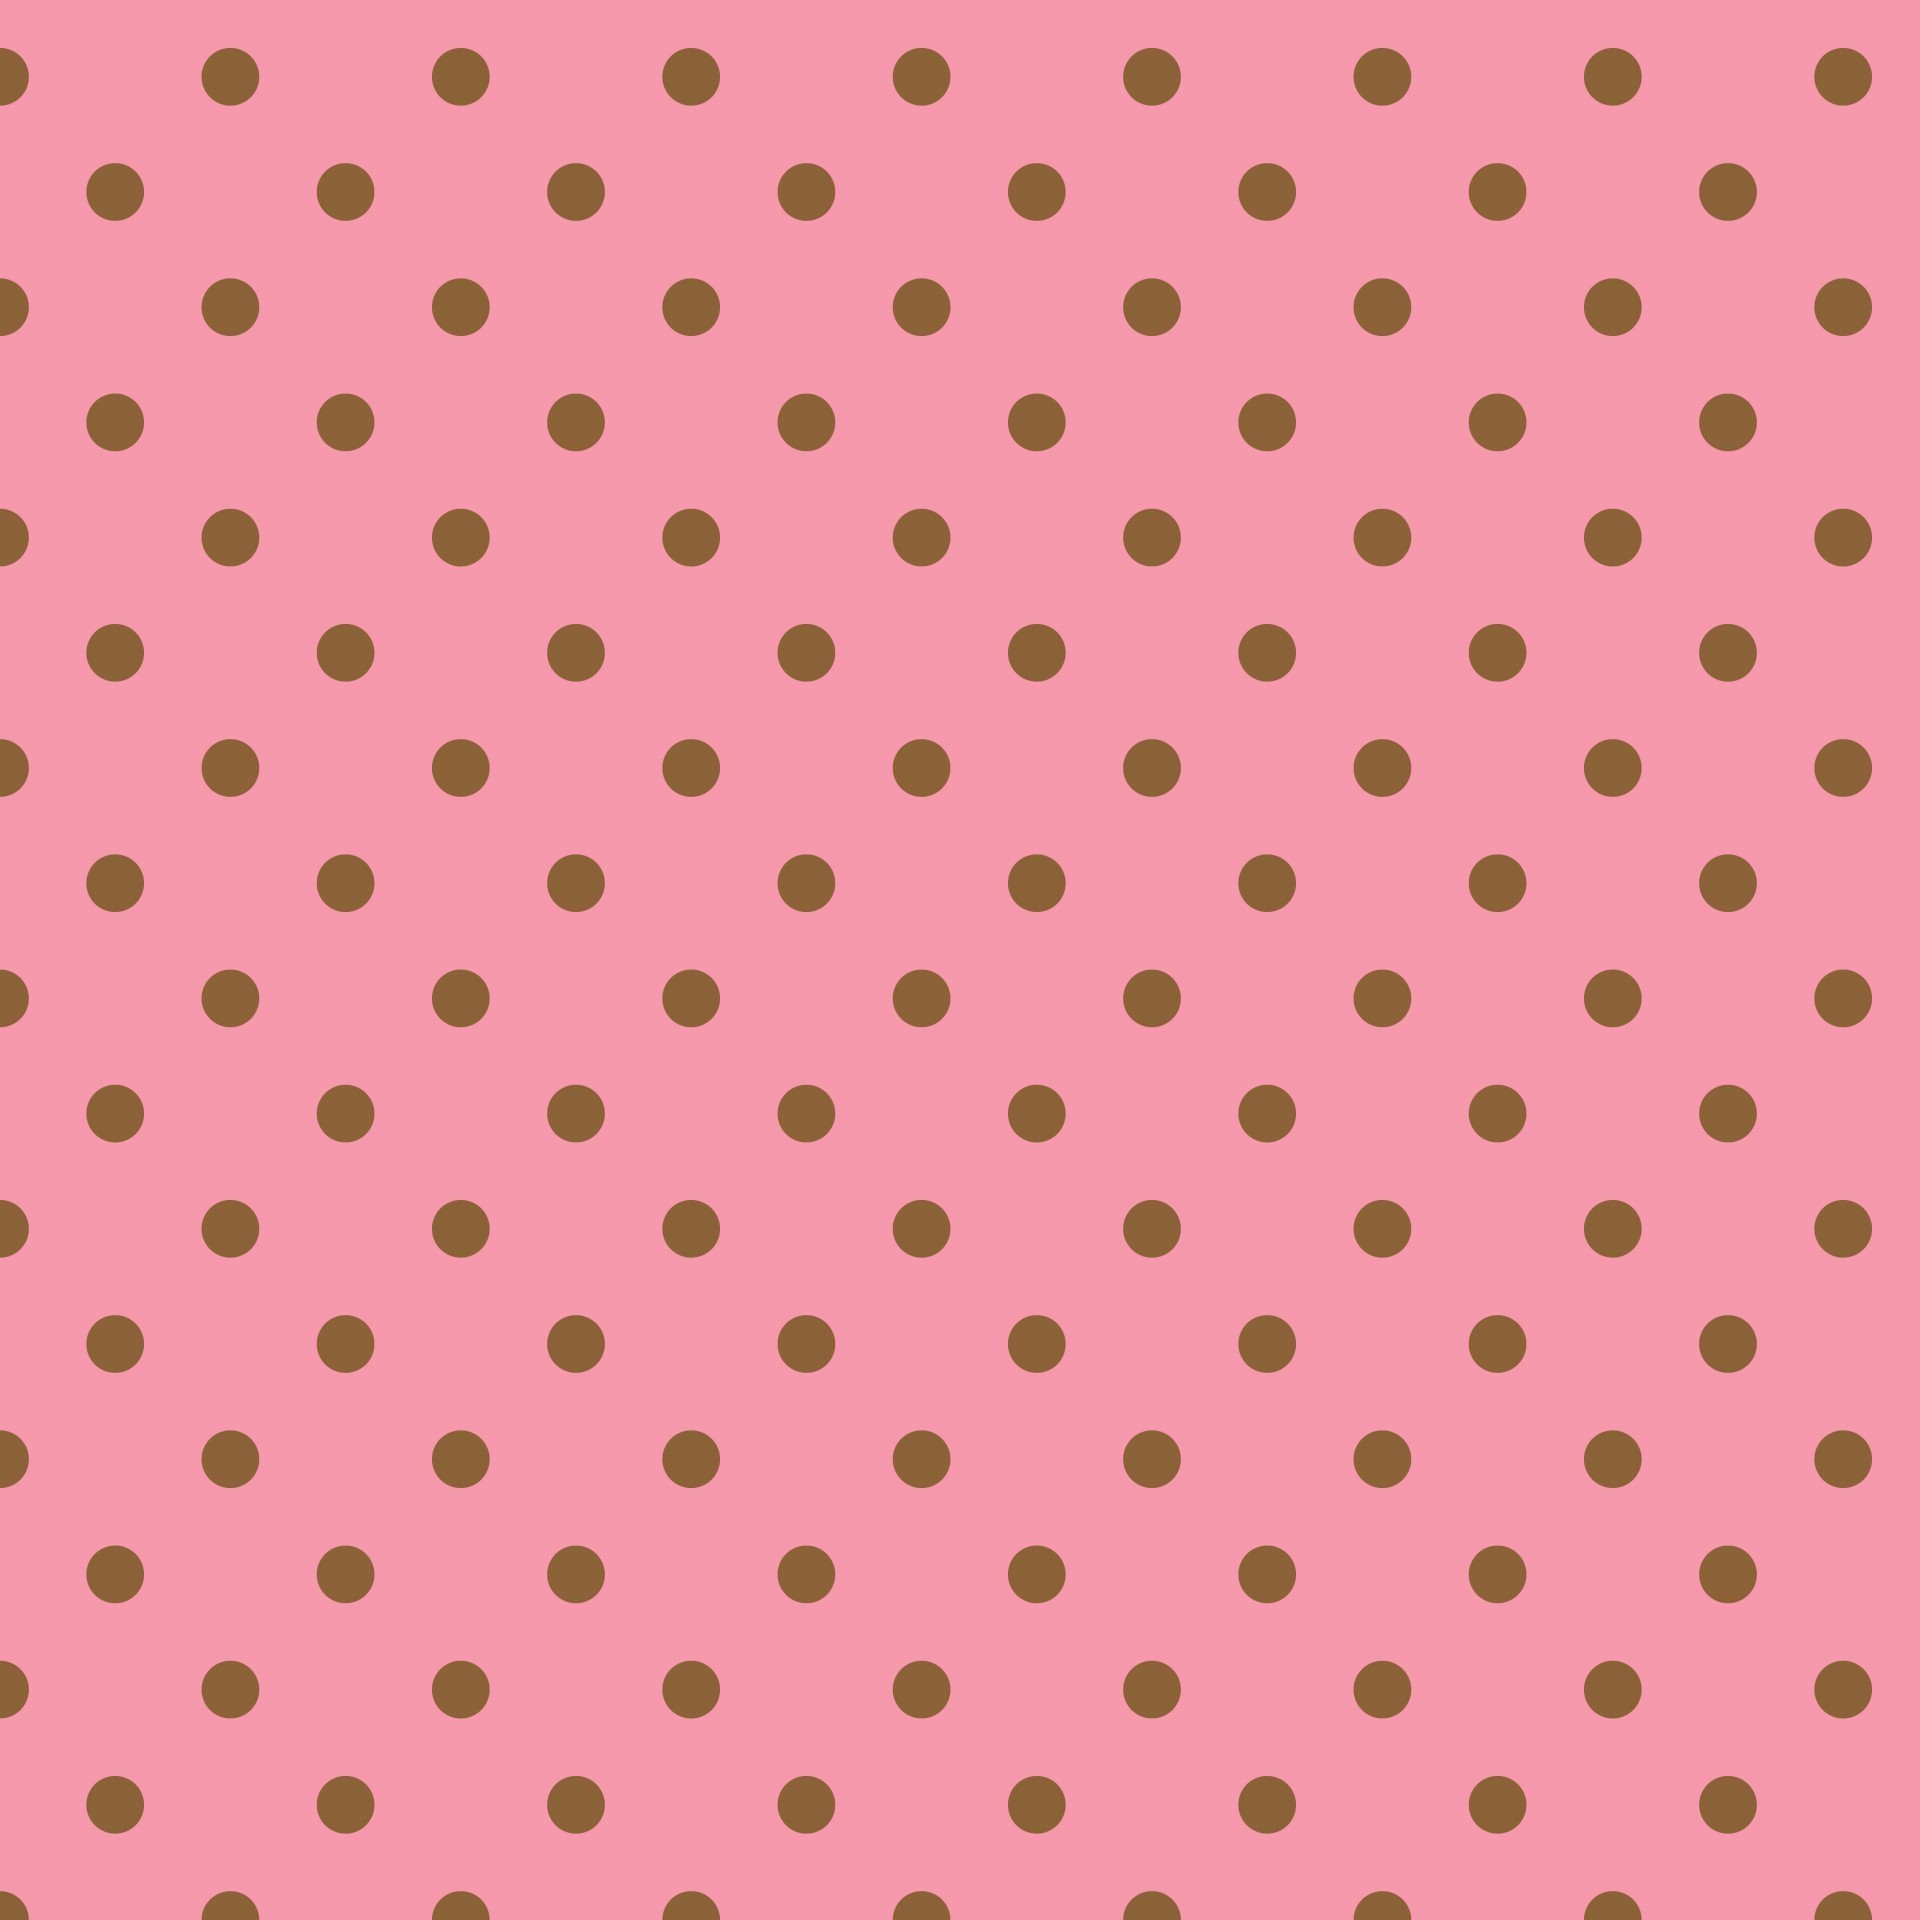 1920x1920 Polka Dots Pink Background Polka Dots Background Pink ...